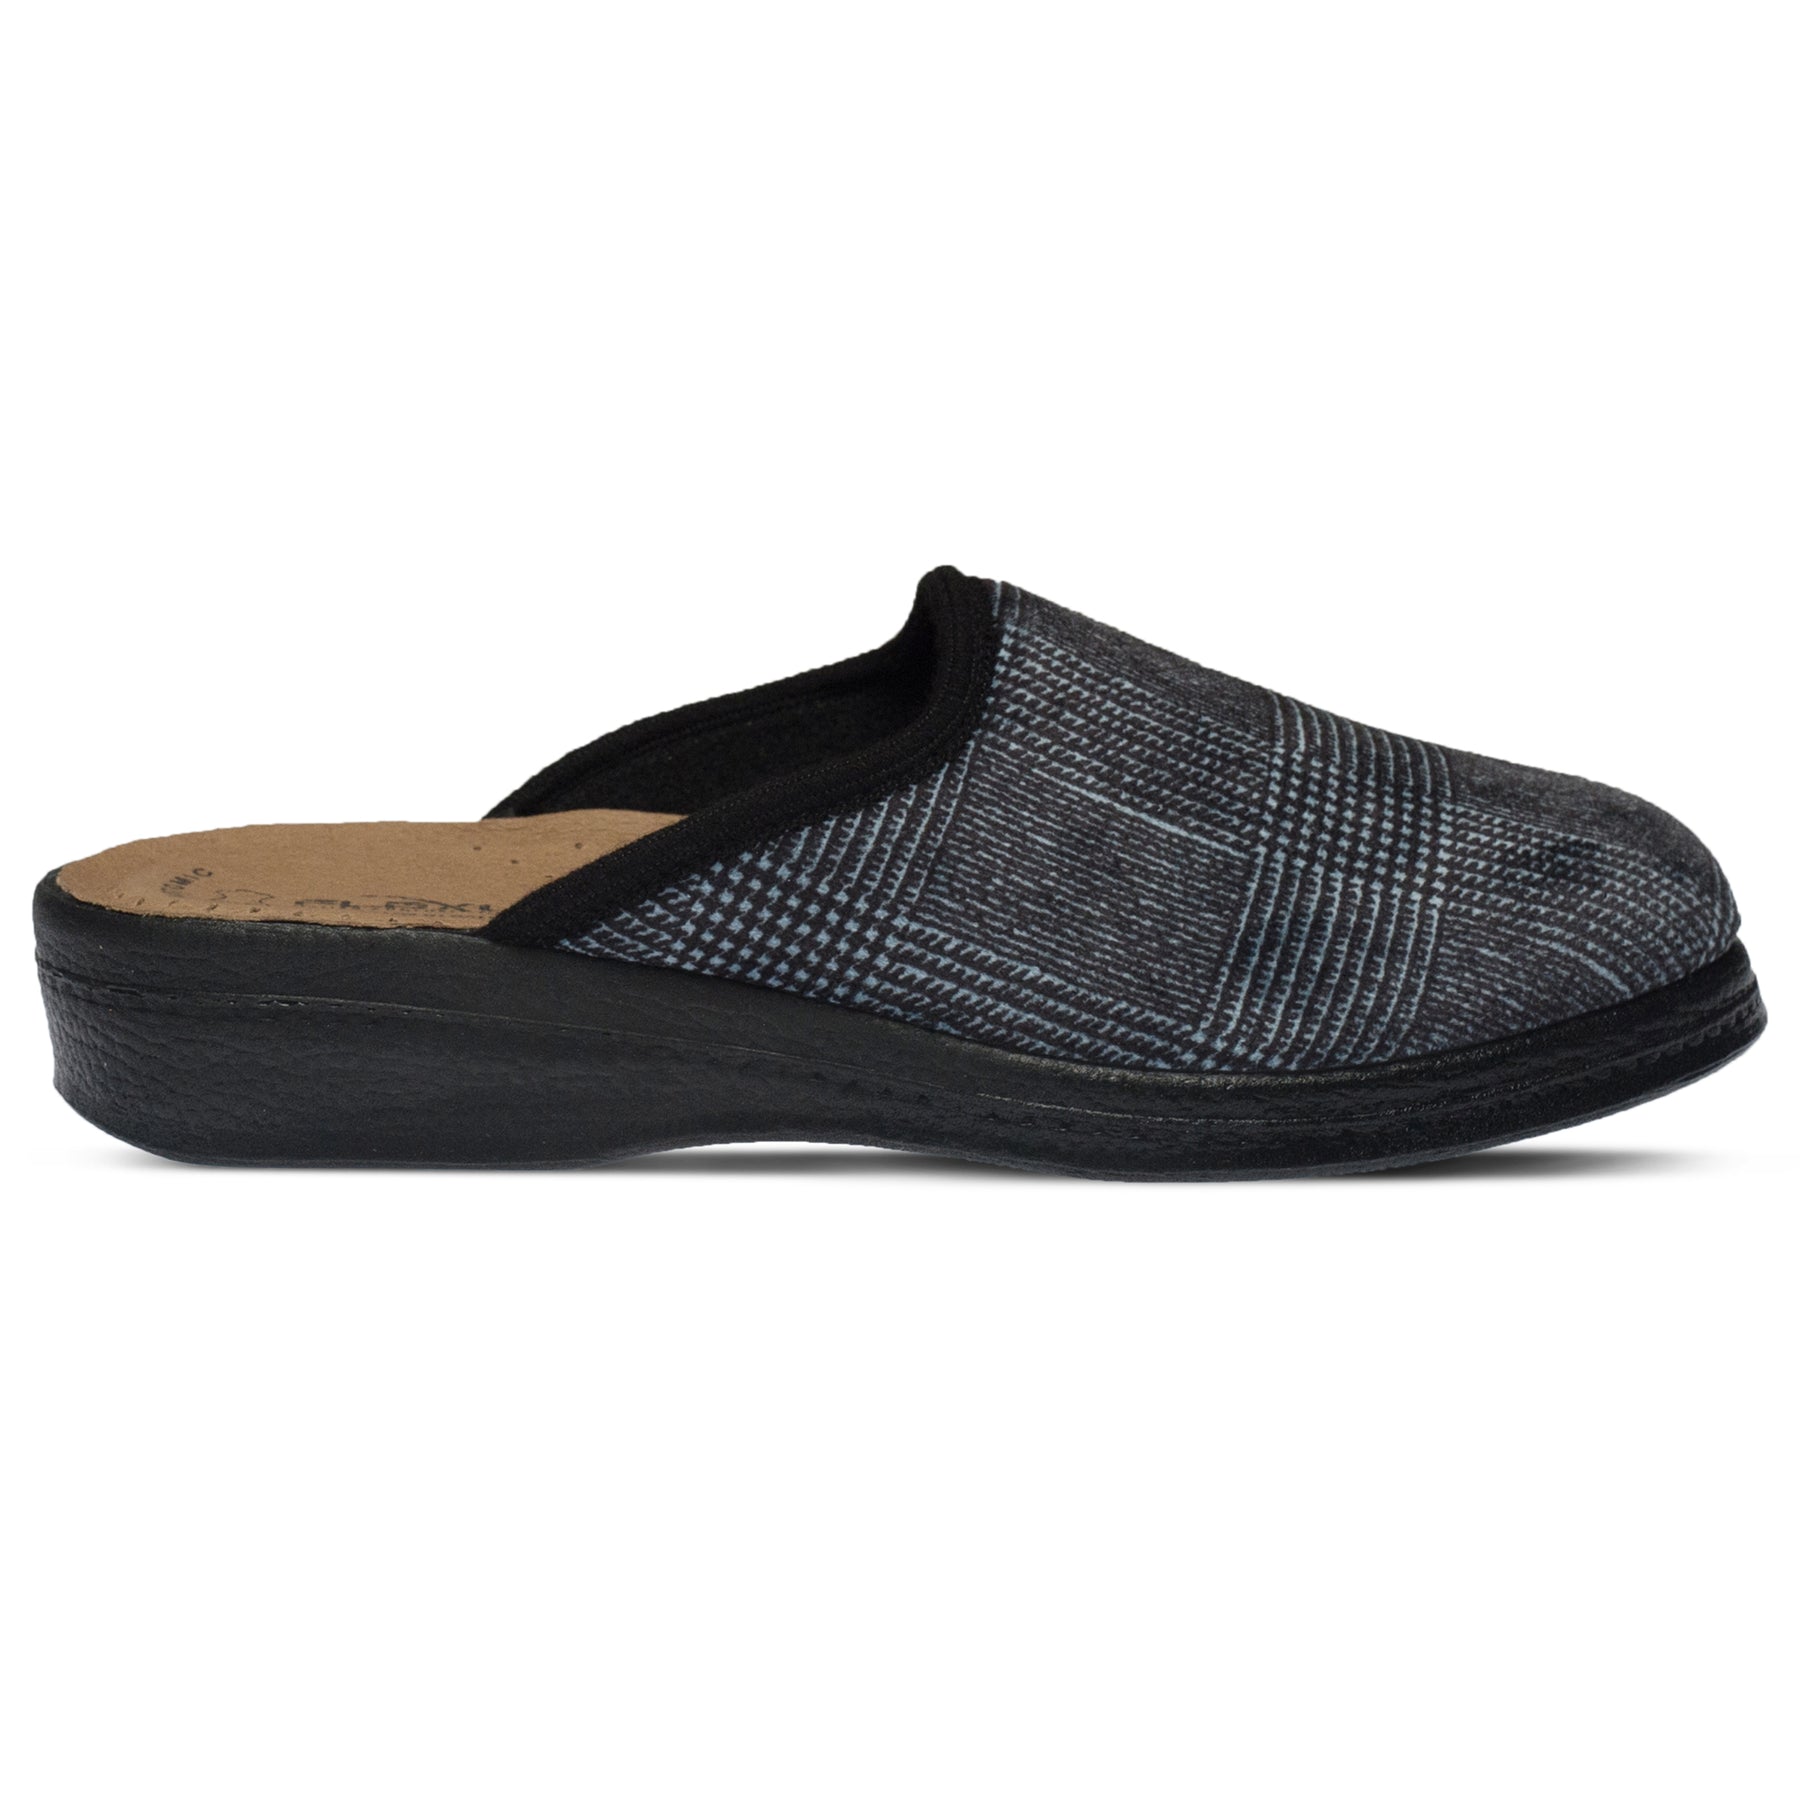 BLACK LINIZIO MEN'S SLIPPER by SPRING STEP MEN – Spring Step Shoes